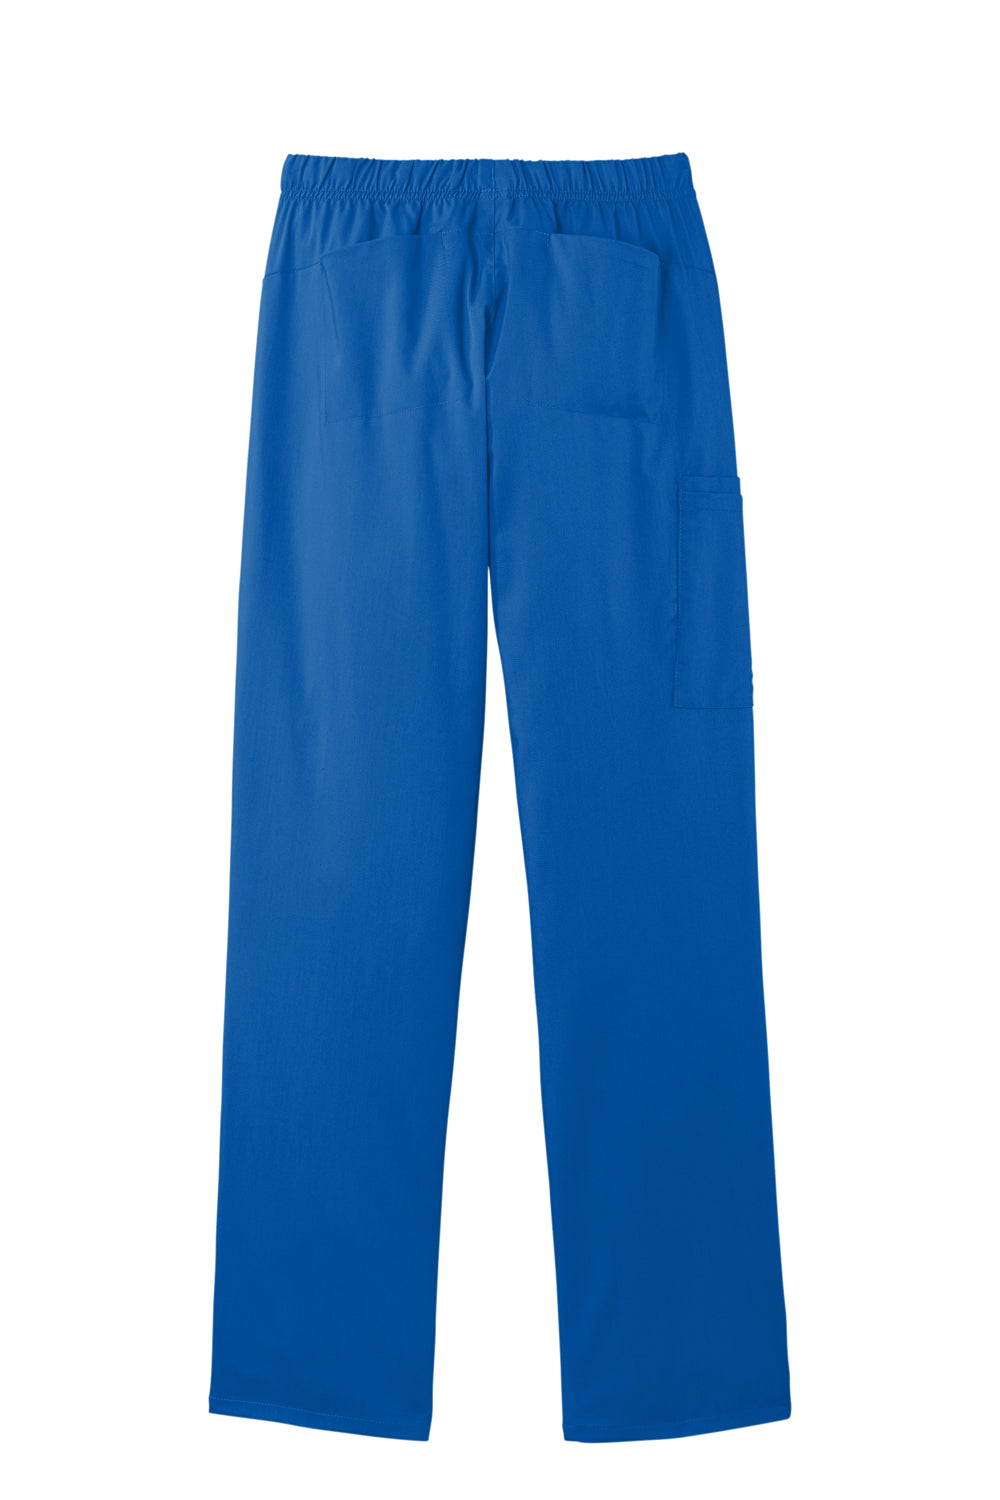 Wonderwink WW4158 Premiere Flex Cargo Pants w/ Pockets Royal Blue Flat Back